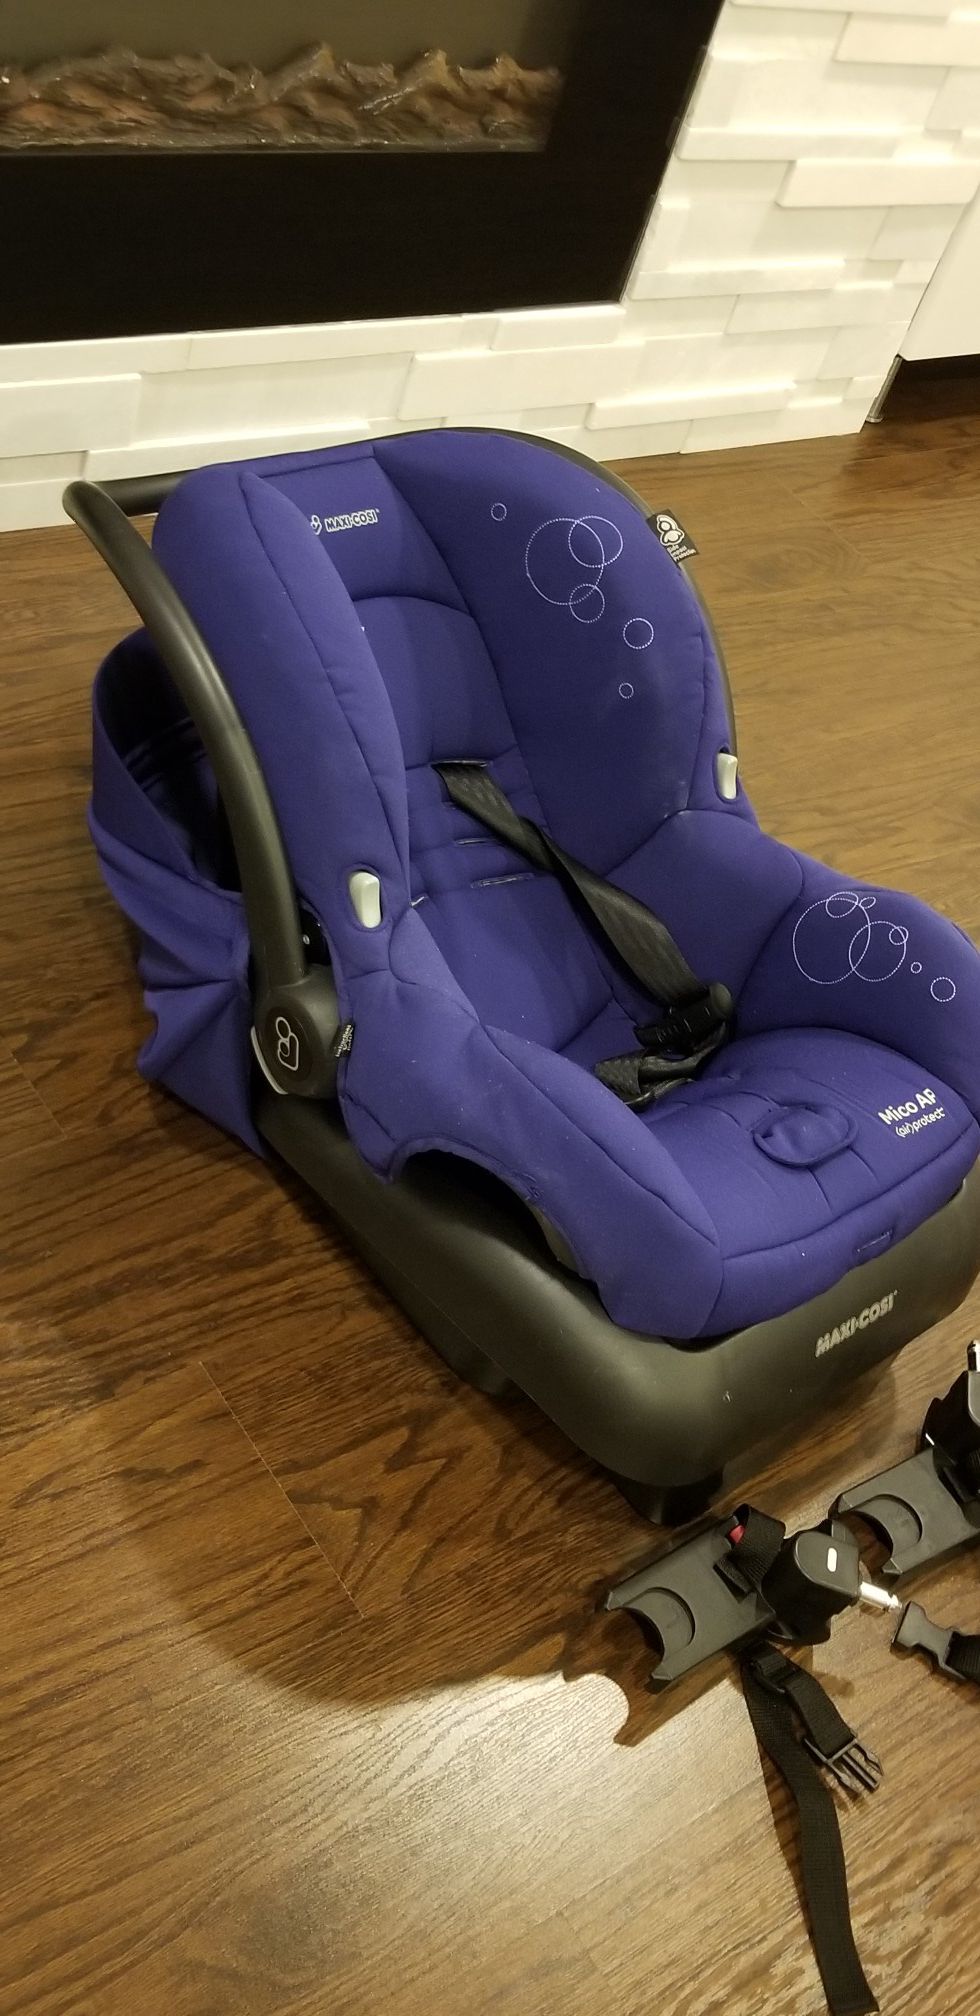 Baby car seat Maxi cossy $20